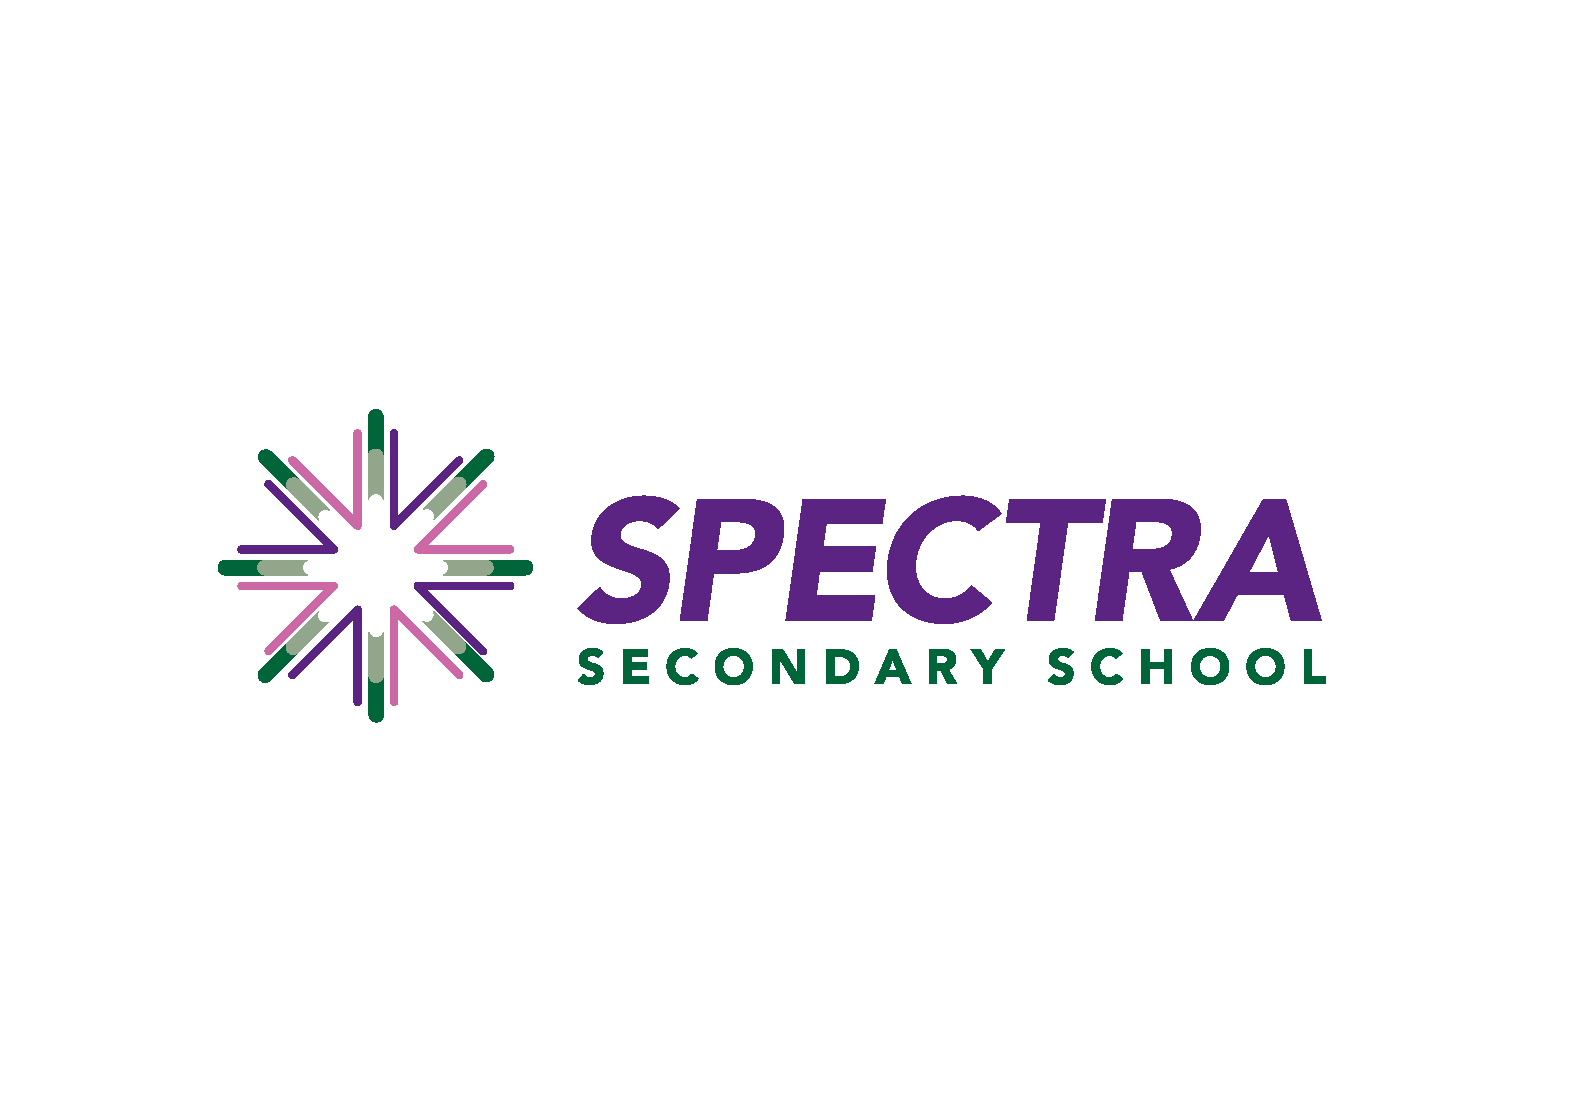 Spectra Secondary School